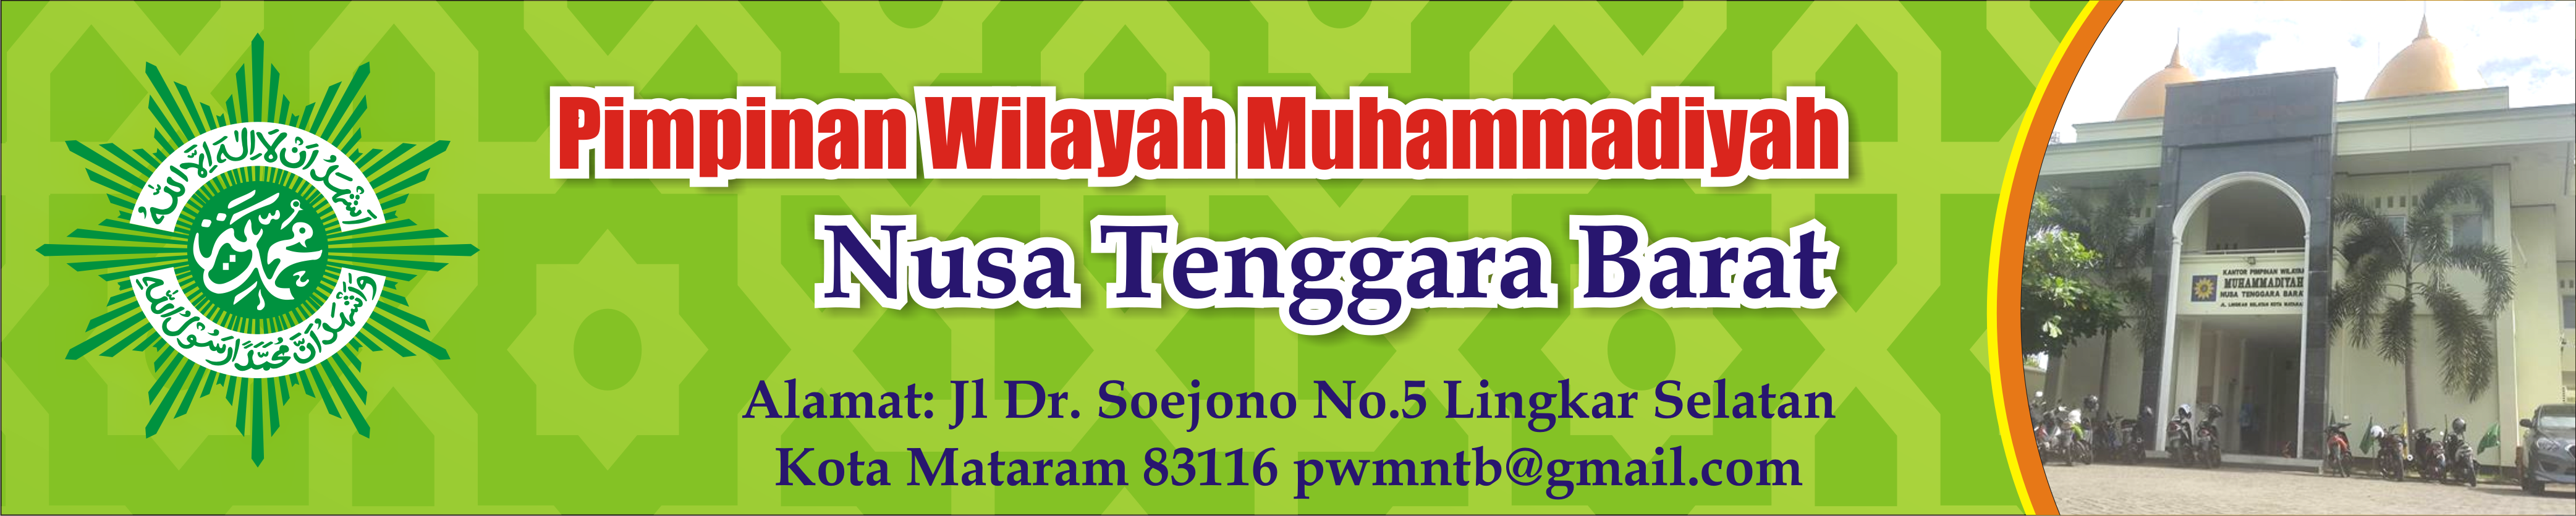 Lembaga Pengembangan Cabang dan Ranting Pimpinan Wilayah Muhammadiyah Nusa Tenggara Barat